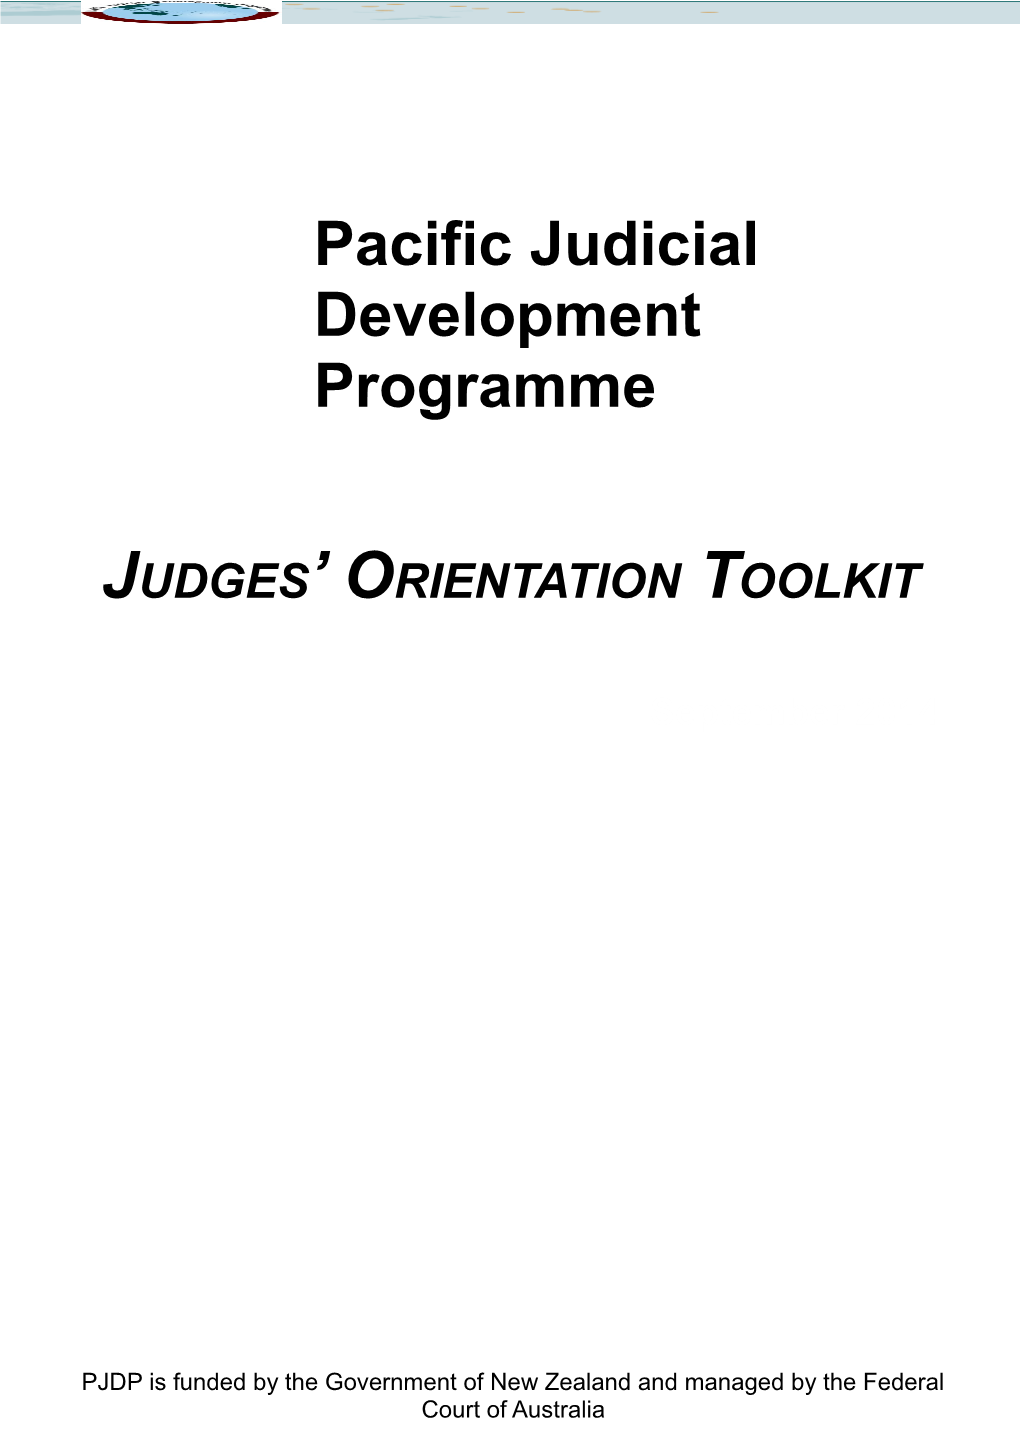 Judges' Orientation Toolkit